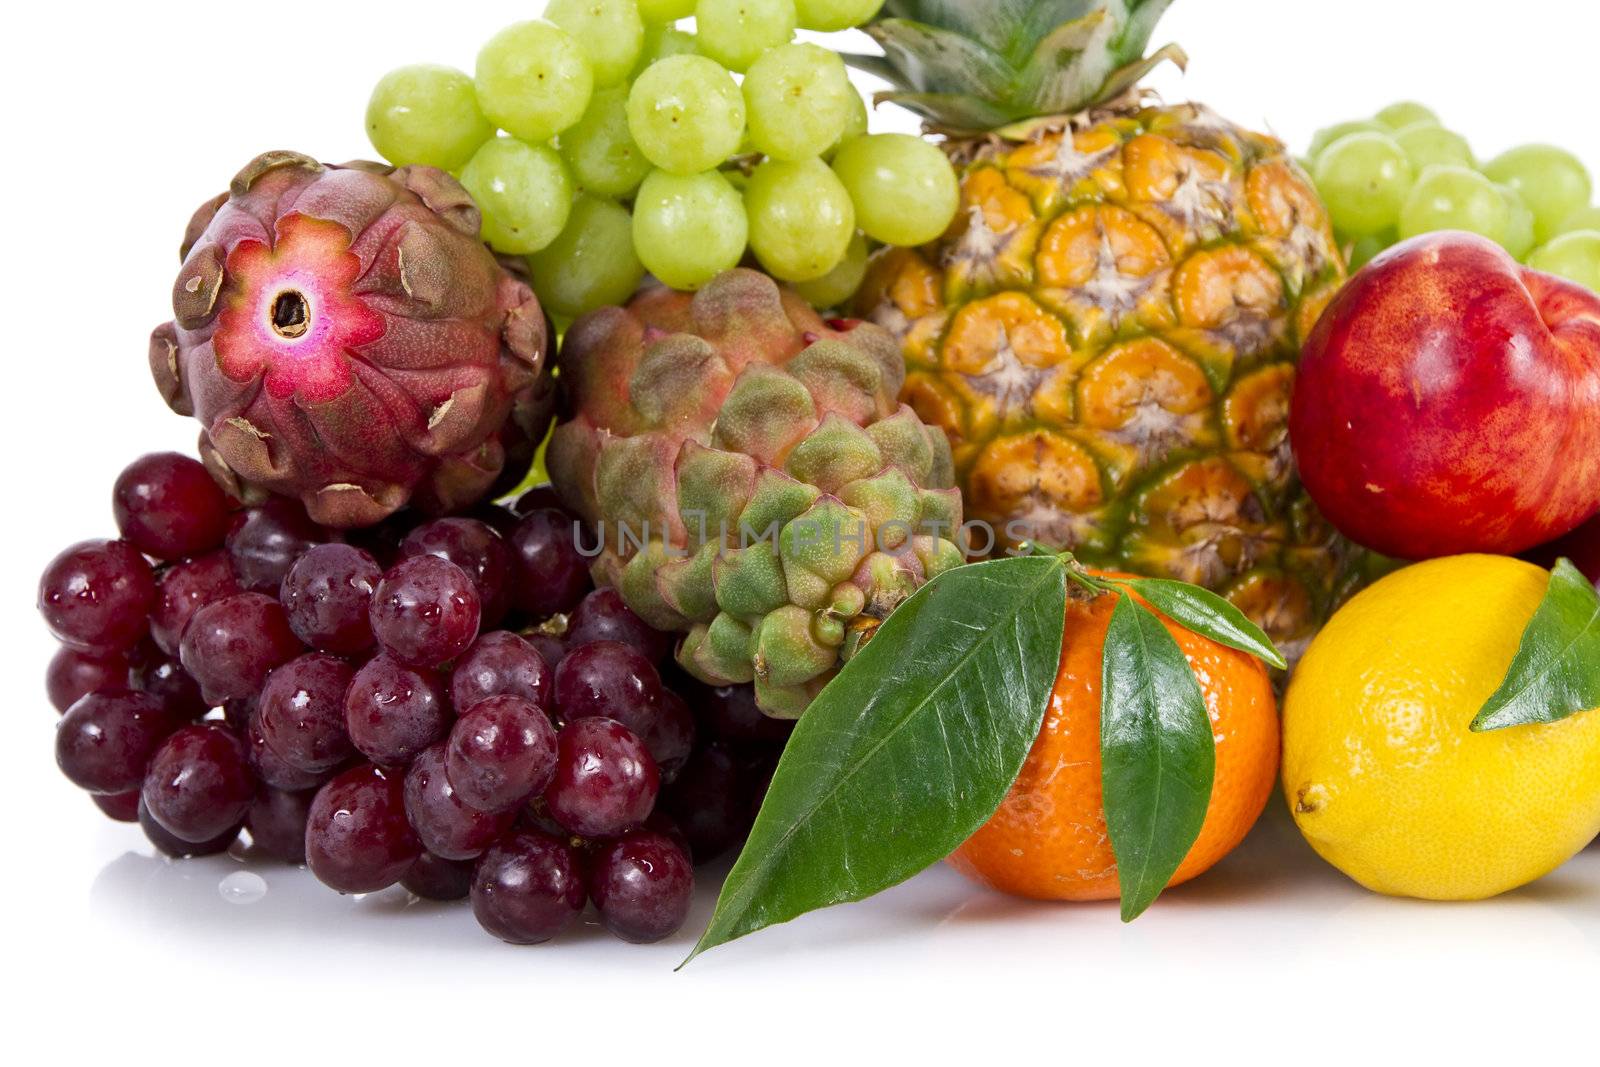 Fruits by caldix